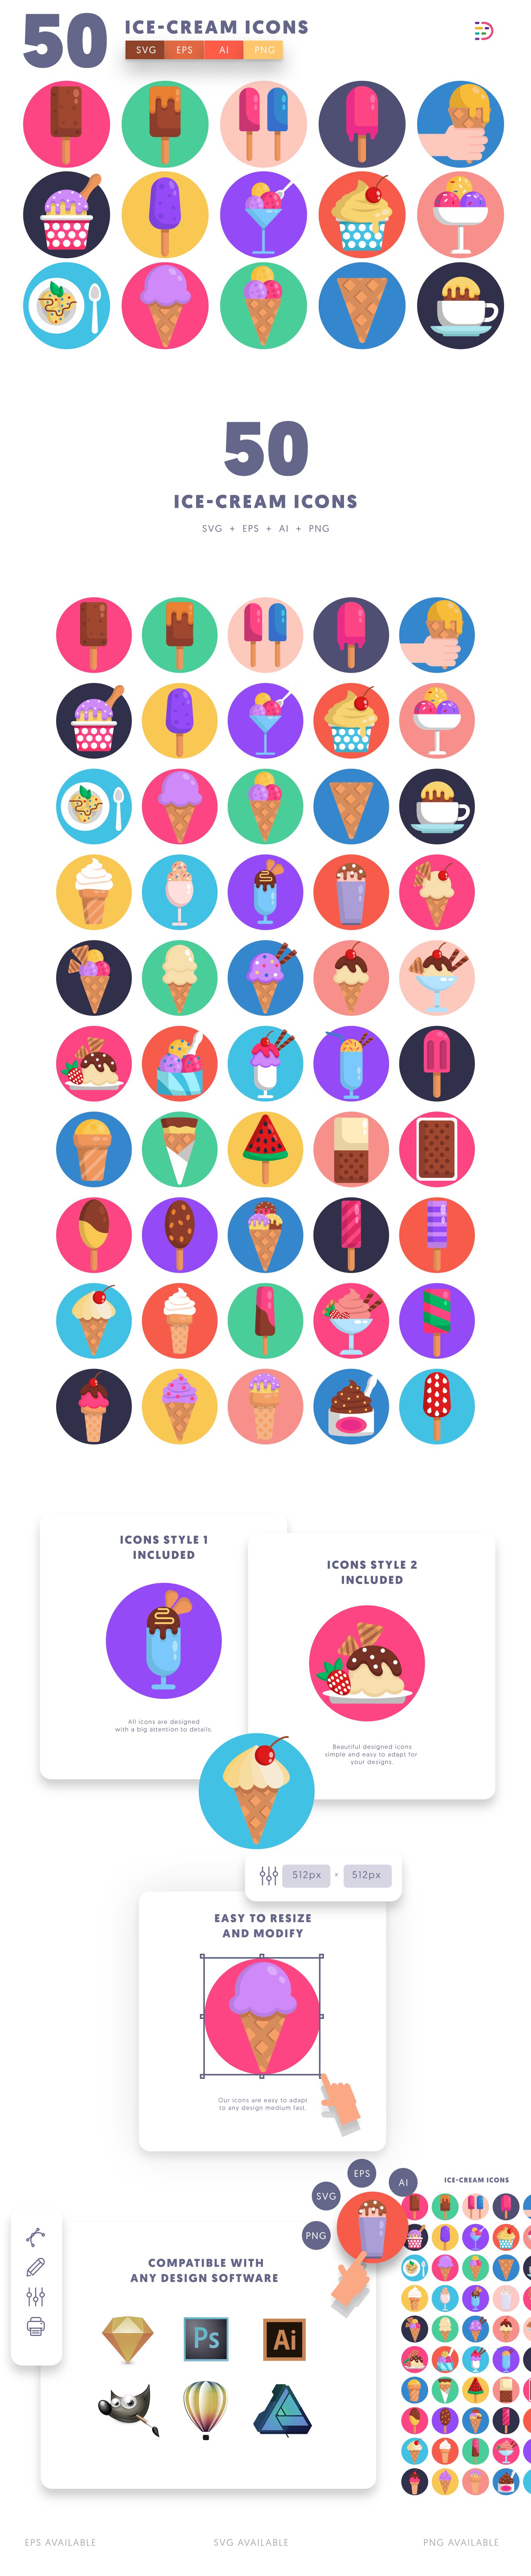 50 Ice-Cream Icons cover image.